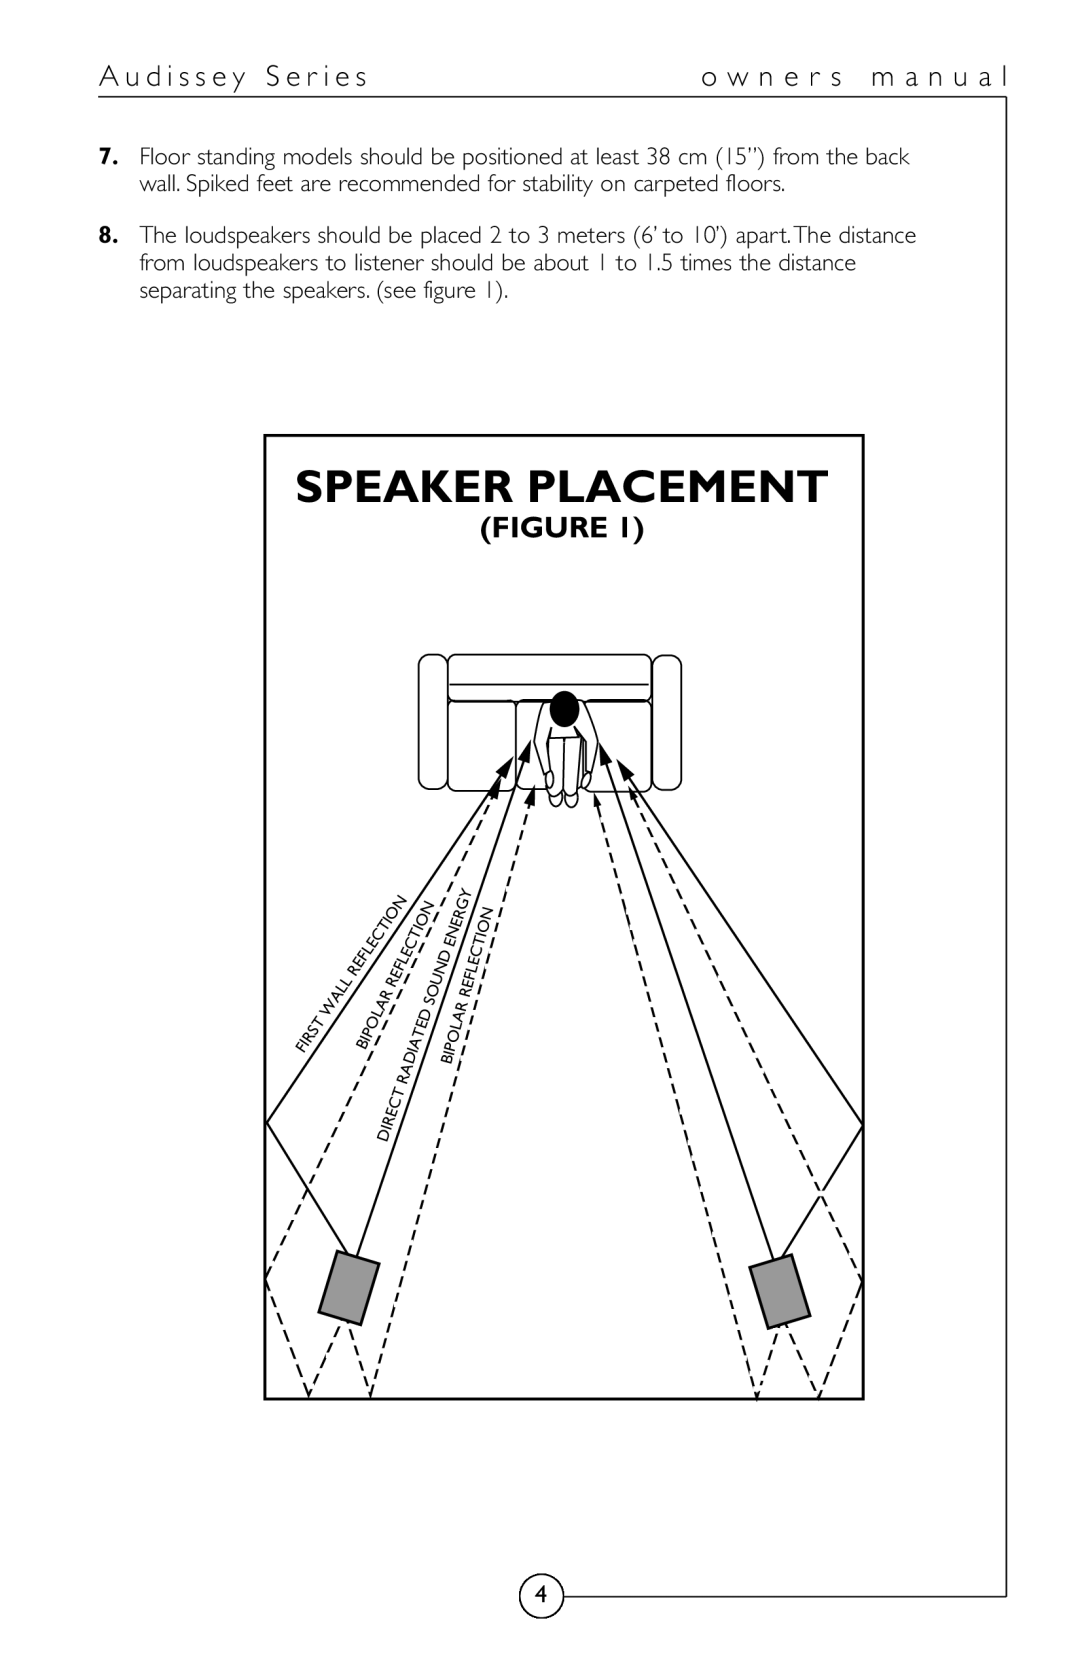 Energy Speaker Systems Audissey Series Speaker Placement, A u d i s s e y S e r i e s, o w n e r s m a n u a l, Direct 